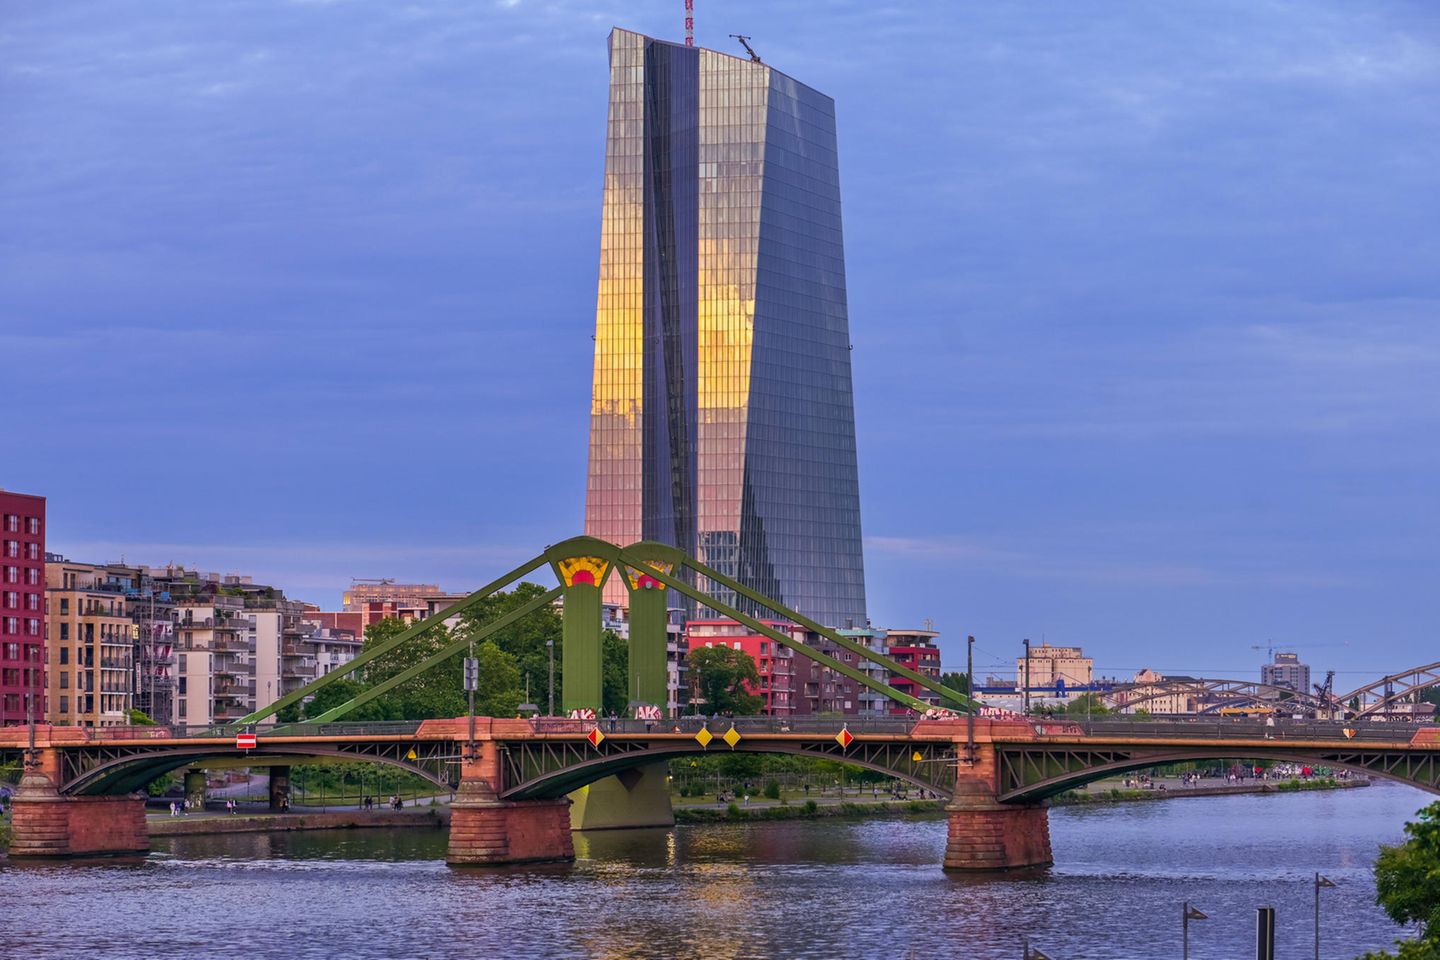 Der gläserne EZB-Turm im Sonnenuntergang